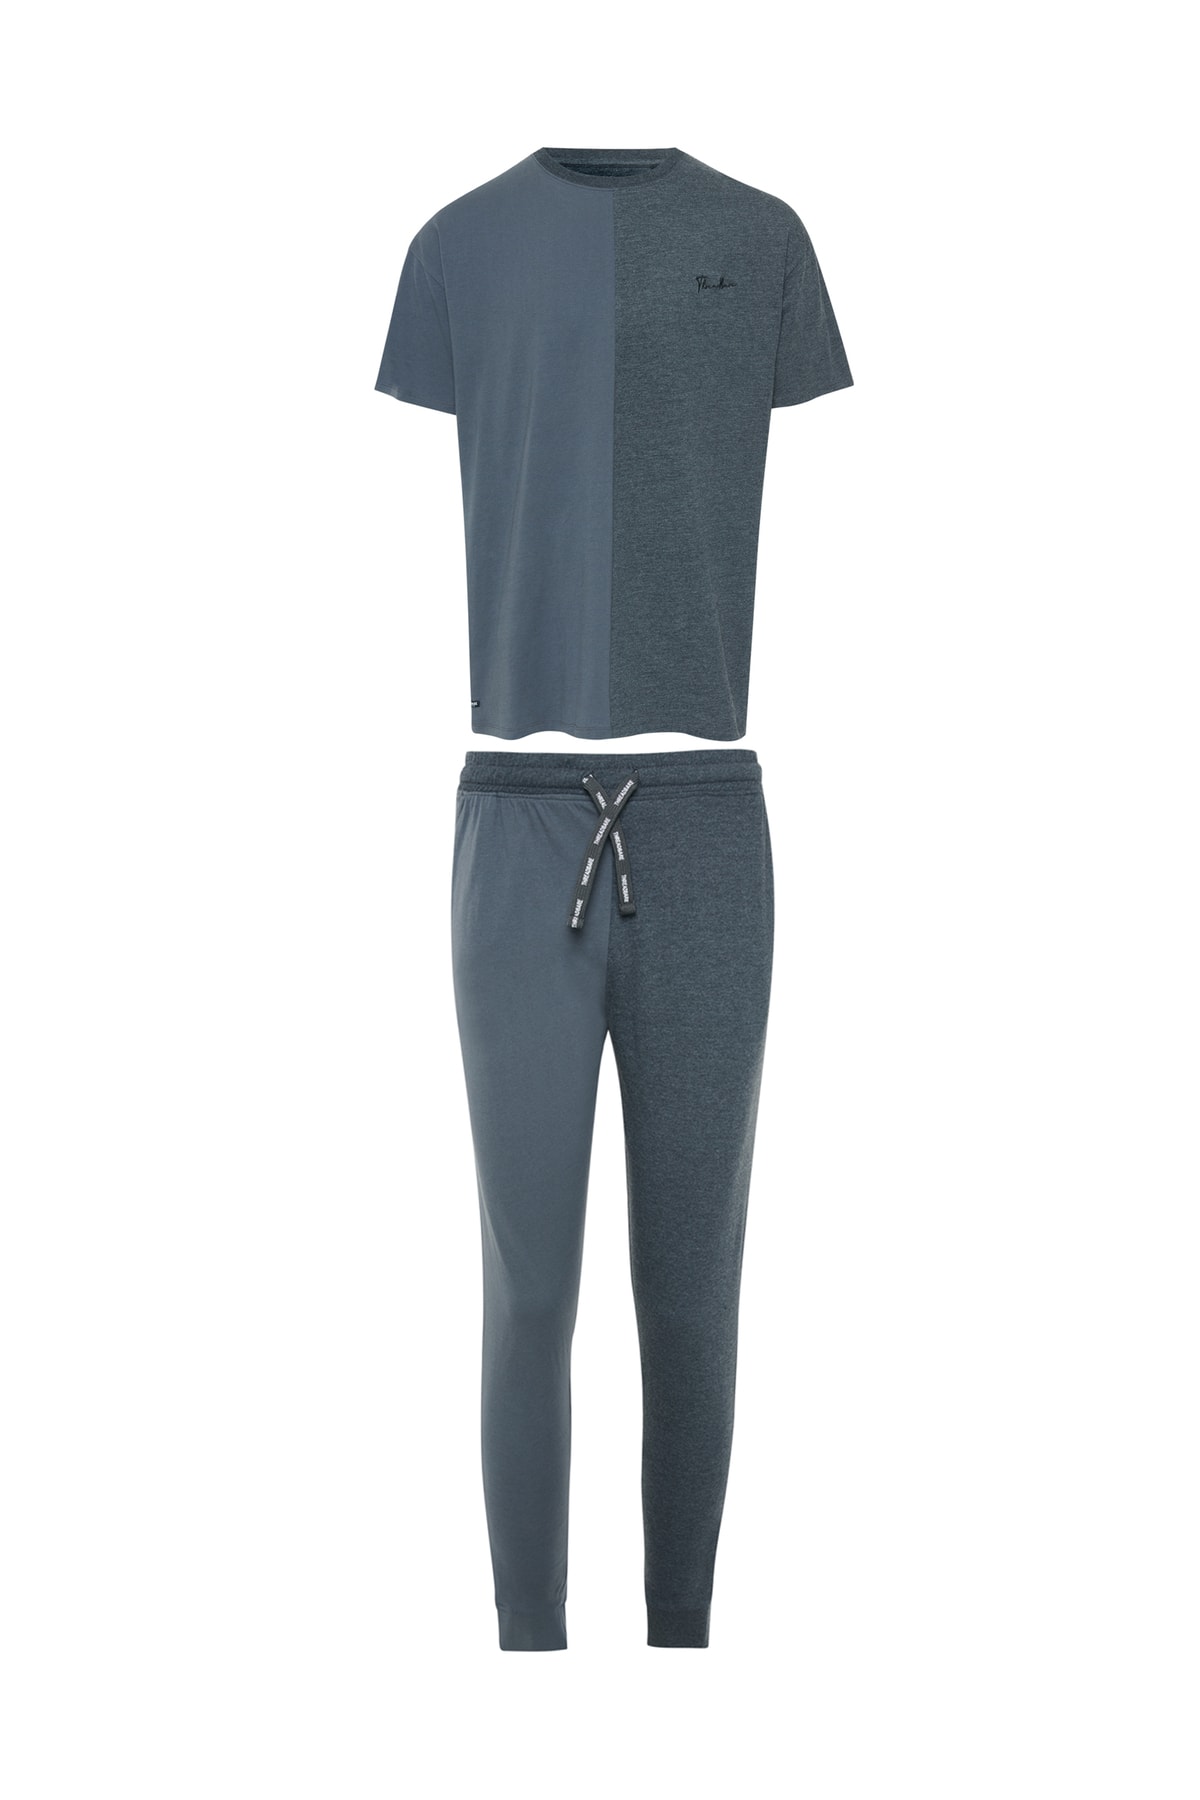 Threadbare Pyjama Grau Unifarben Fast ausverkauft